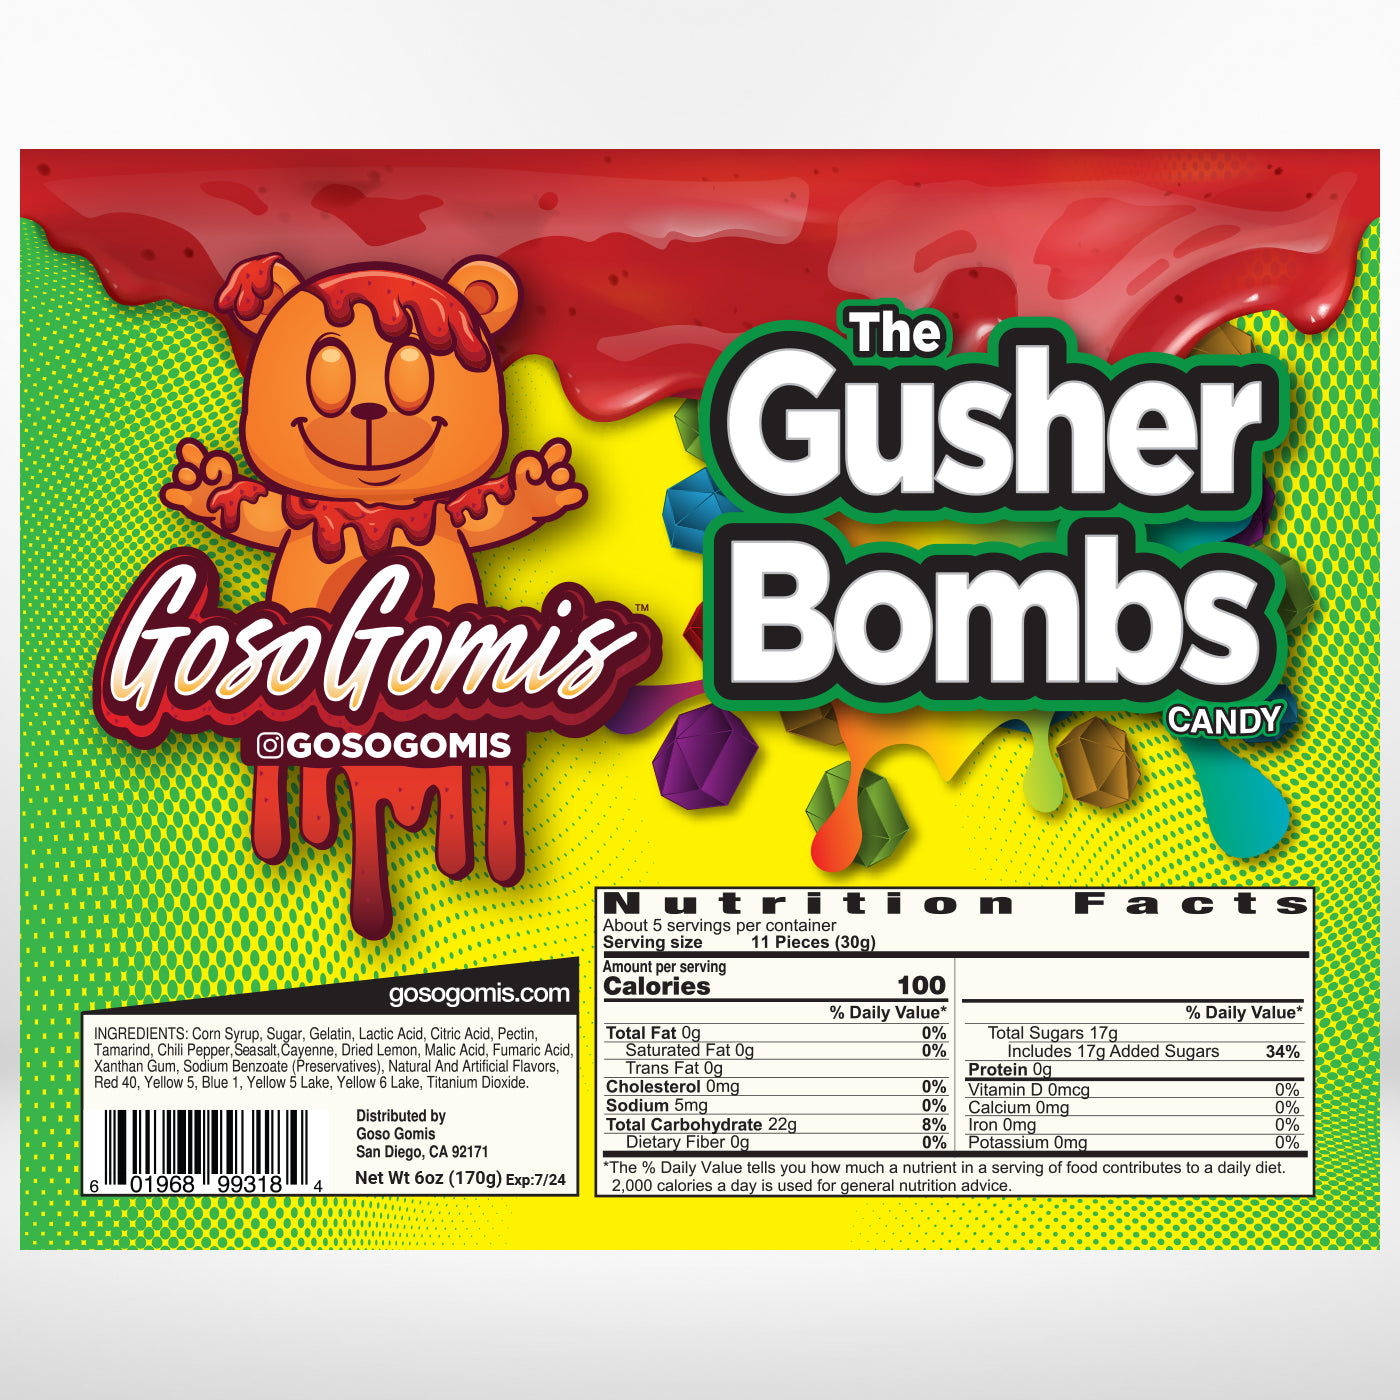 Gusher Bombs